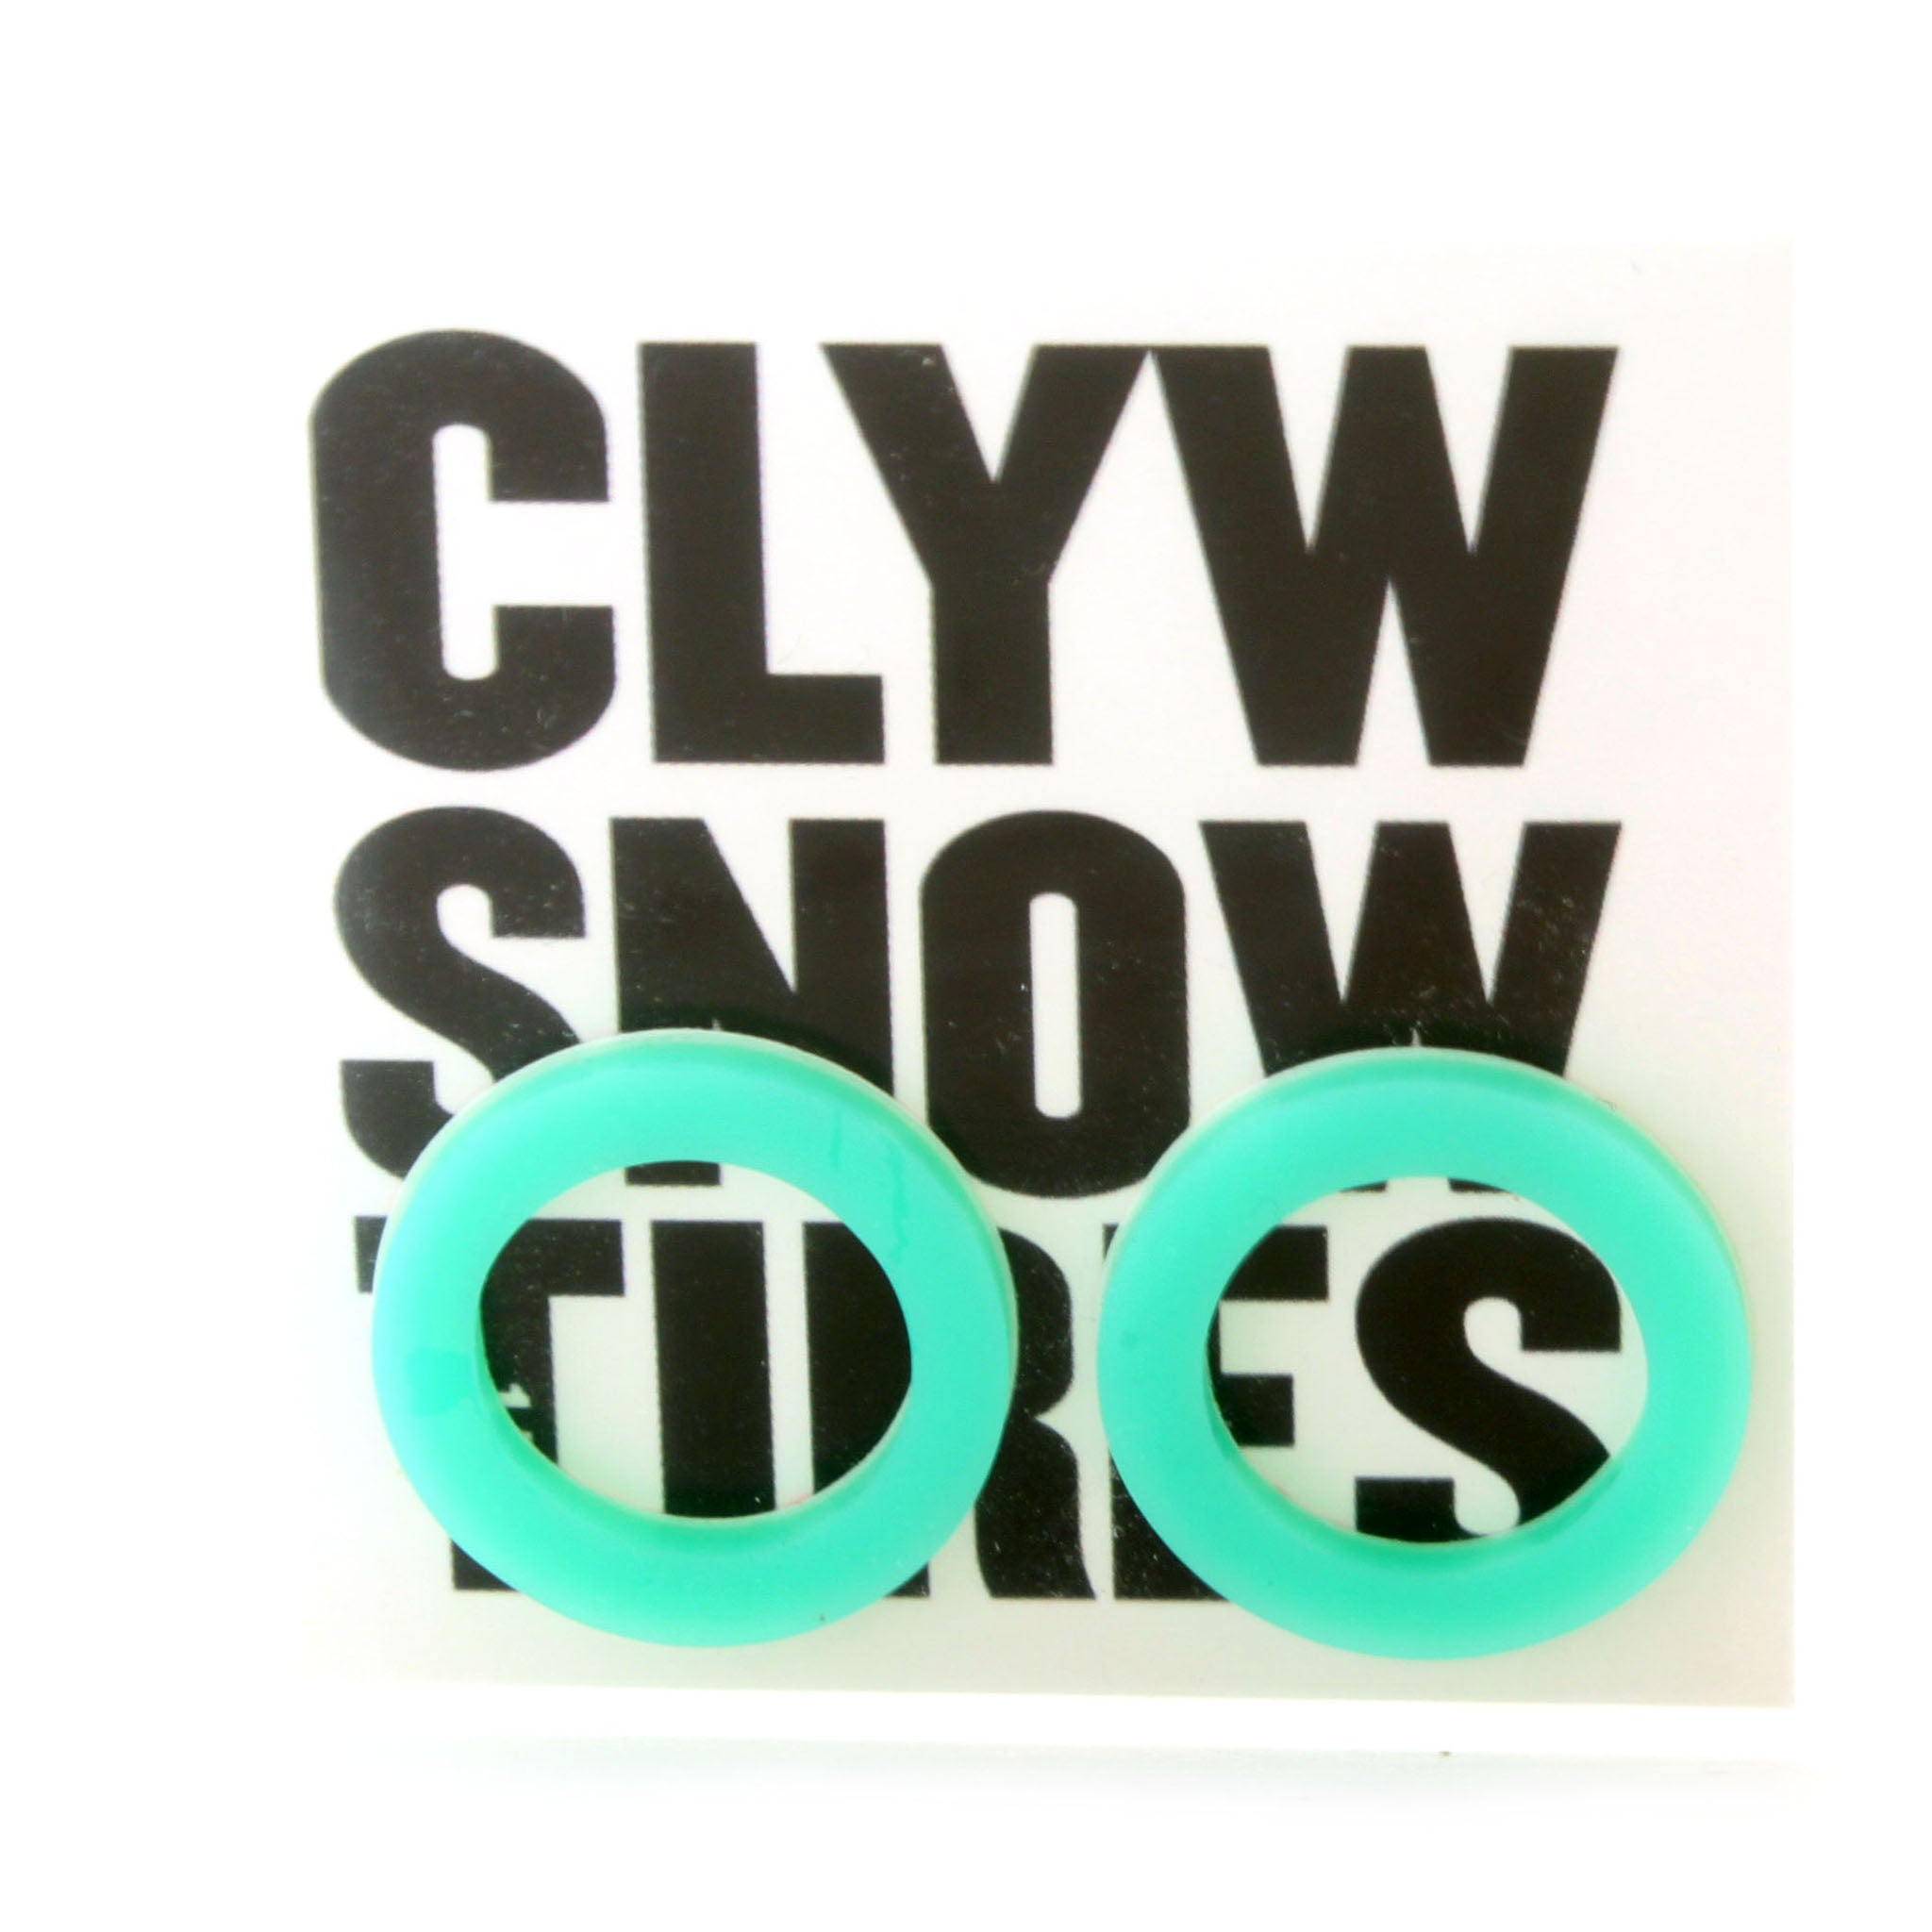 CLYW Snow Tires Pad (2pcs) - CLYW